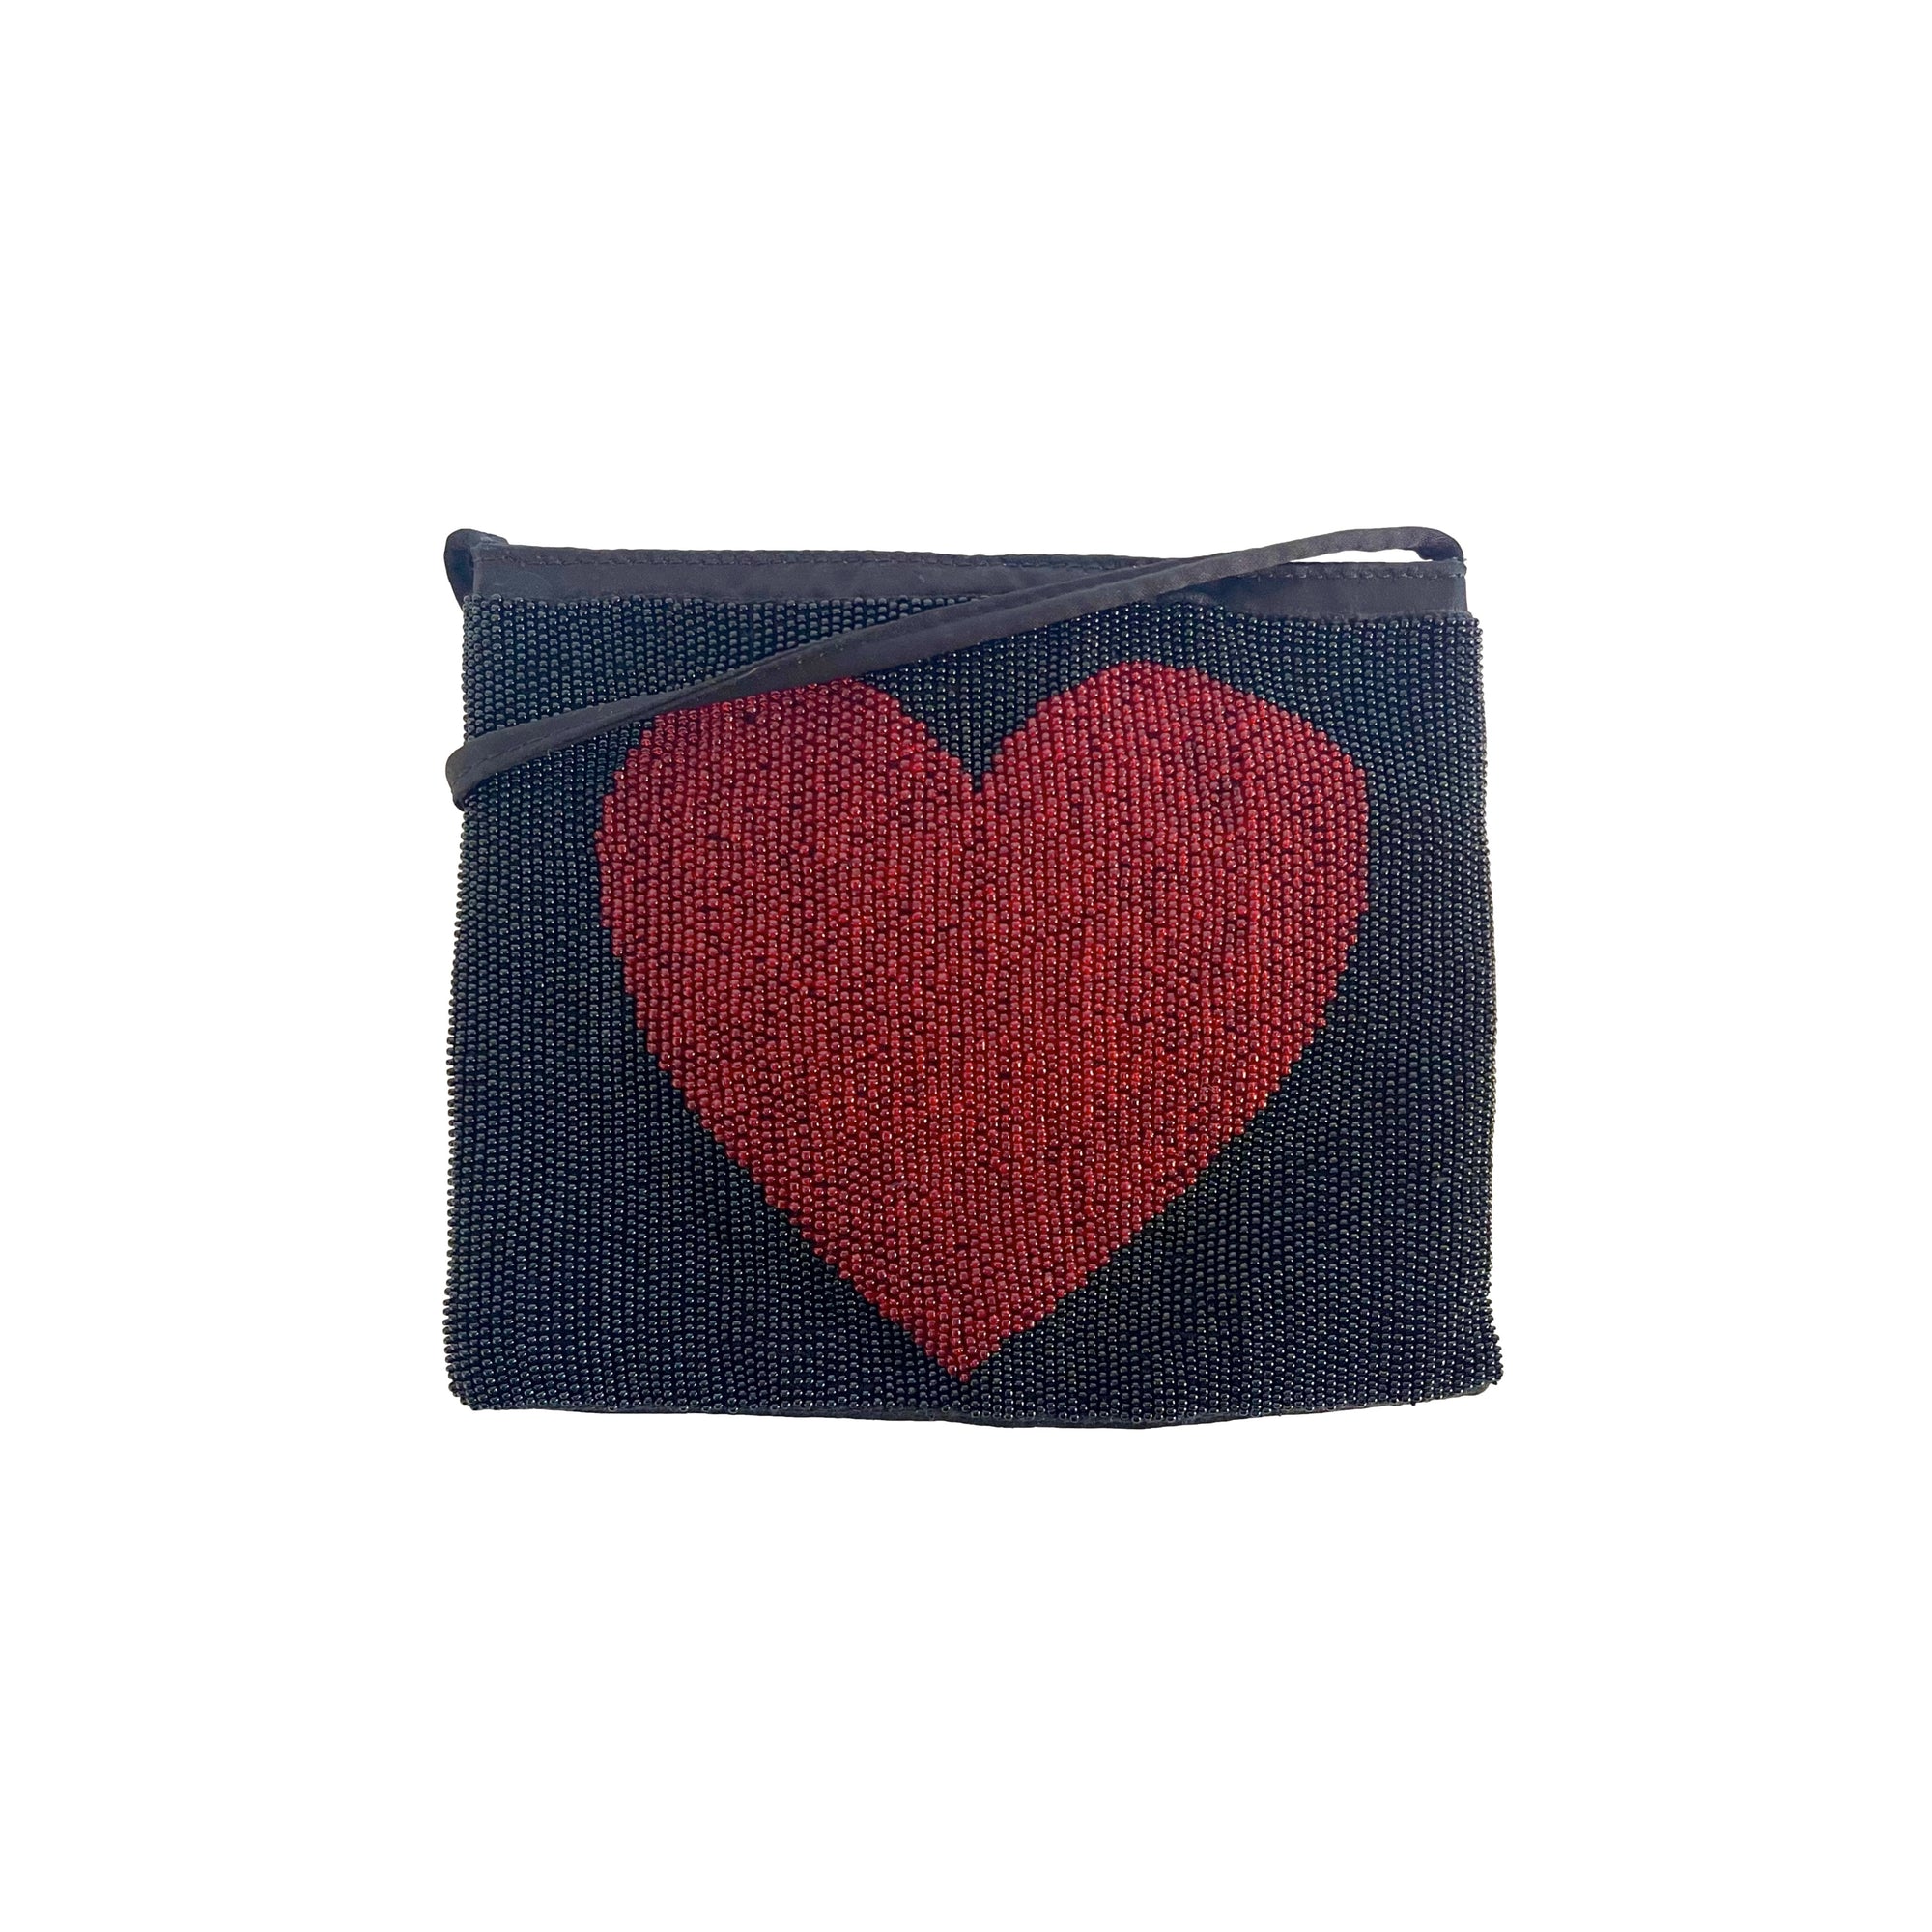 Moschino Black Heart Beaded Bag - Handbags